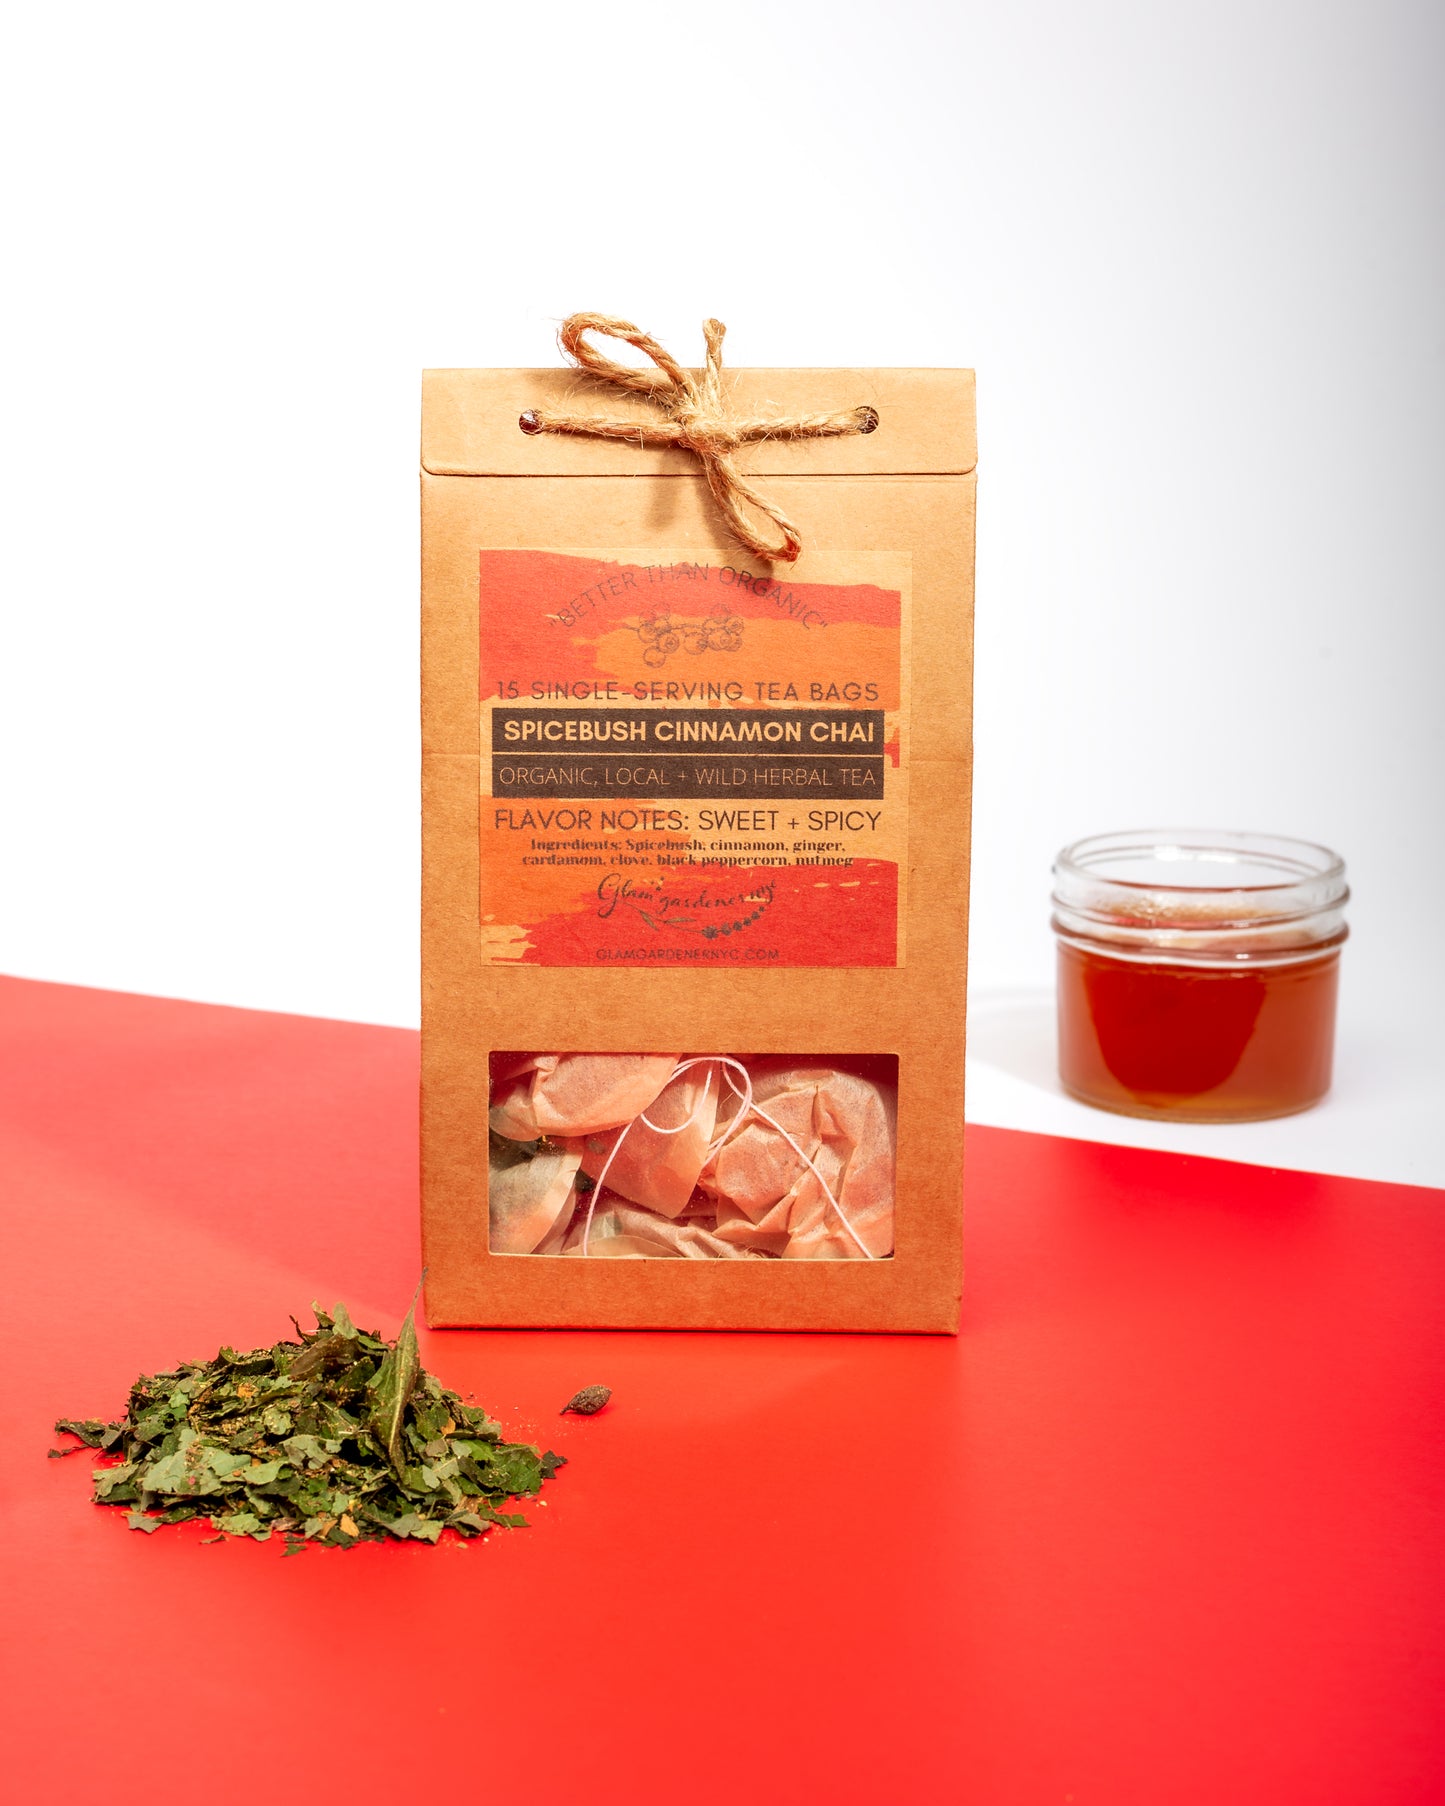 Spicebush Cinnamon Chai tea bagged herbal tea (sweet, spicy, and warming)